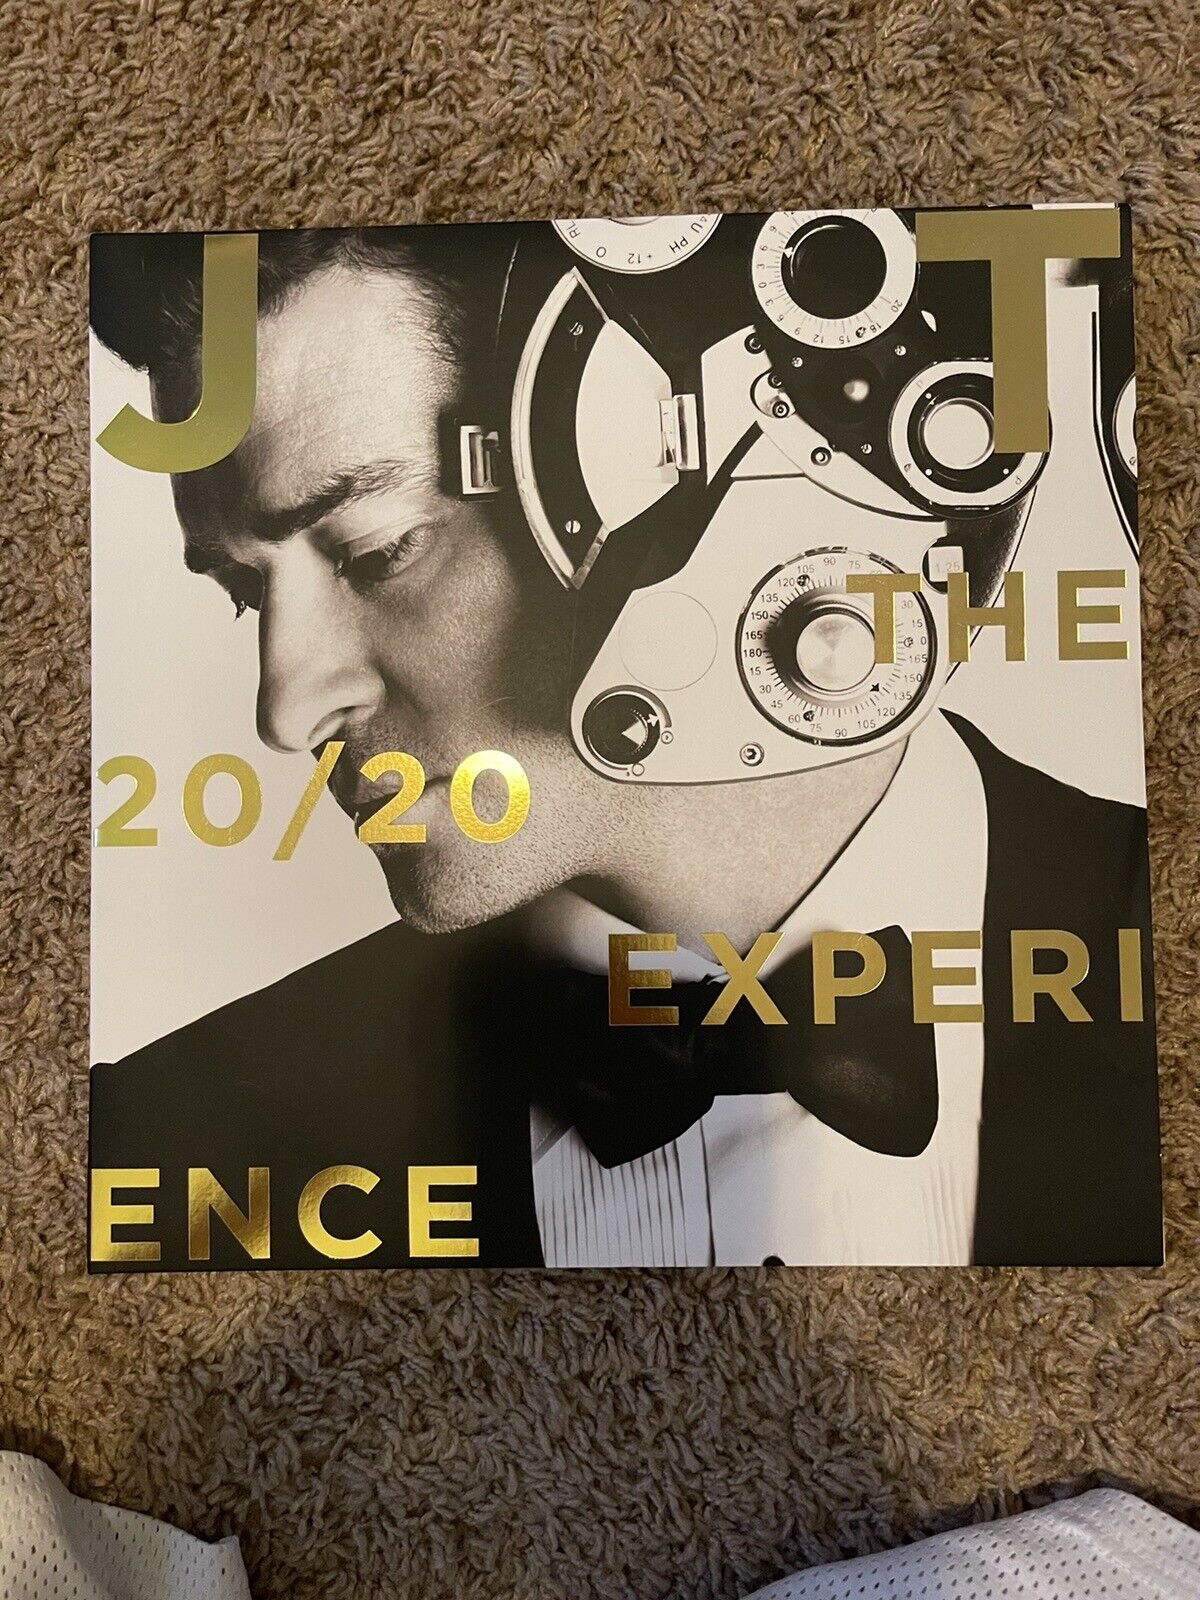 Justin Timberlake  20/20 Experience 2 Of 2 [New Vinyl LP] Explicit, $1 SHIP